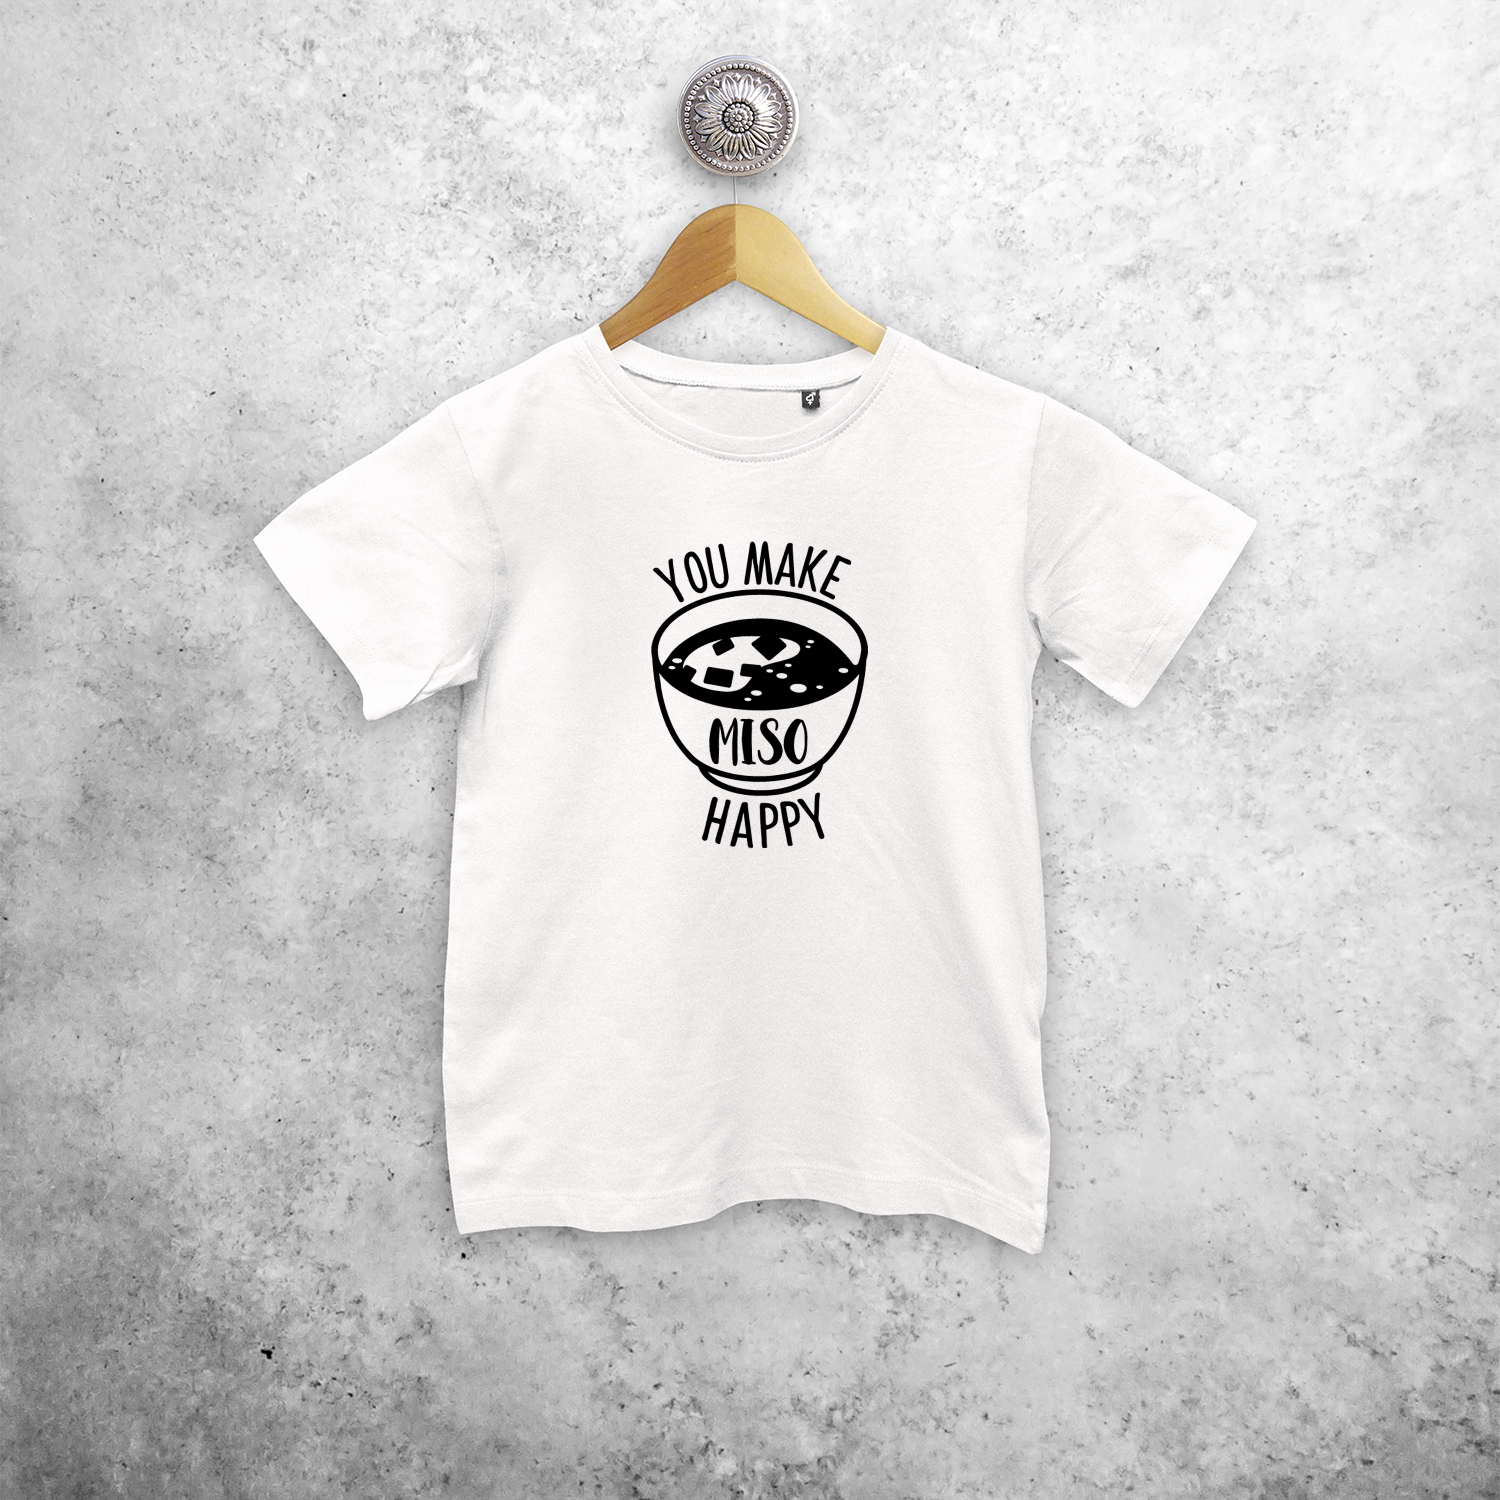 'You make miso happy' kids shortsleeve shirt